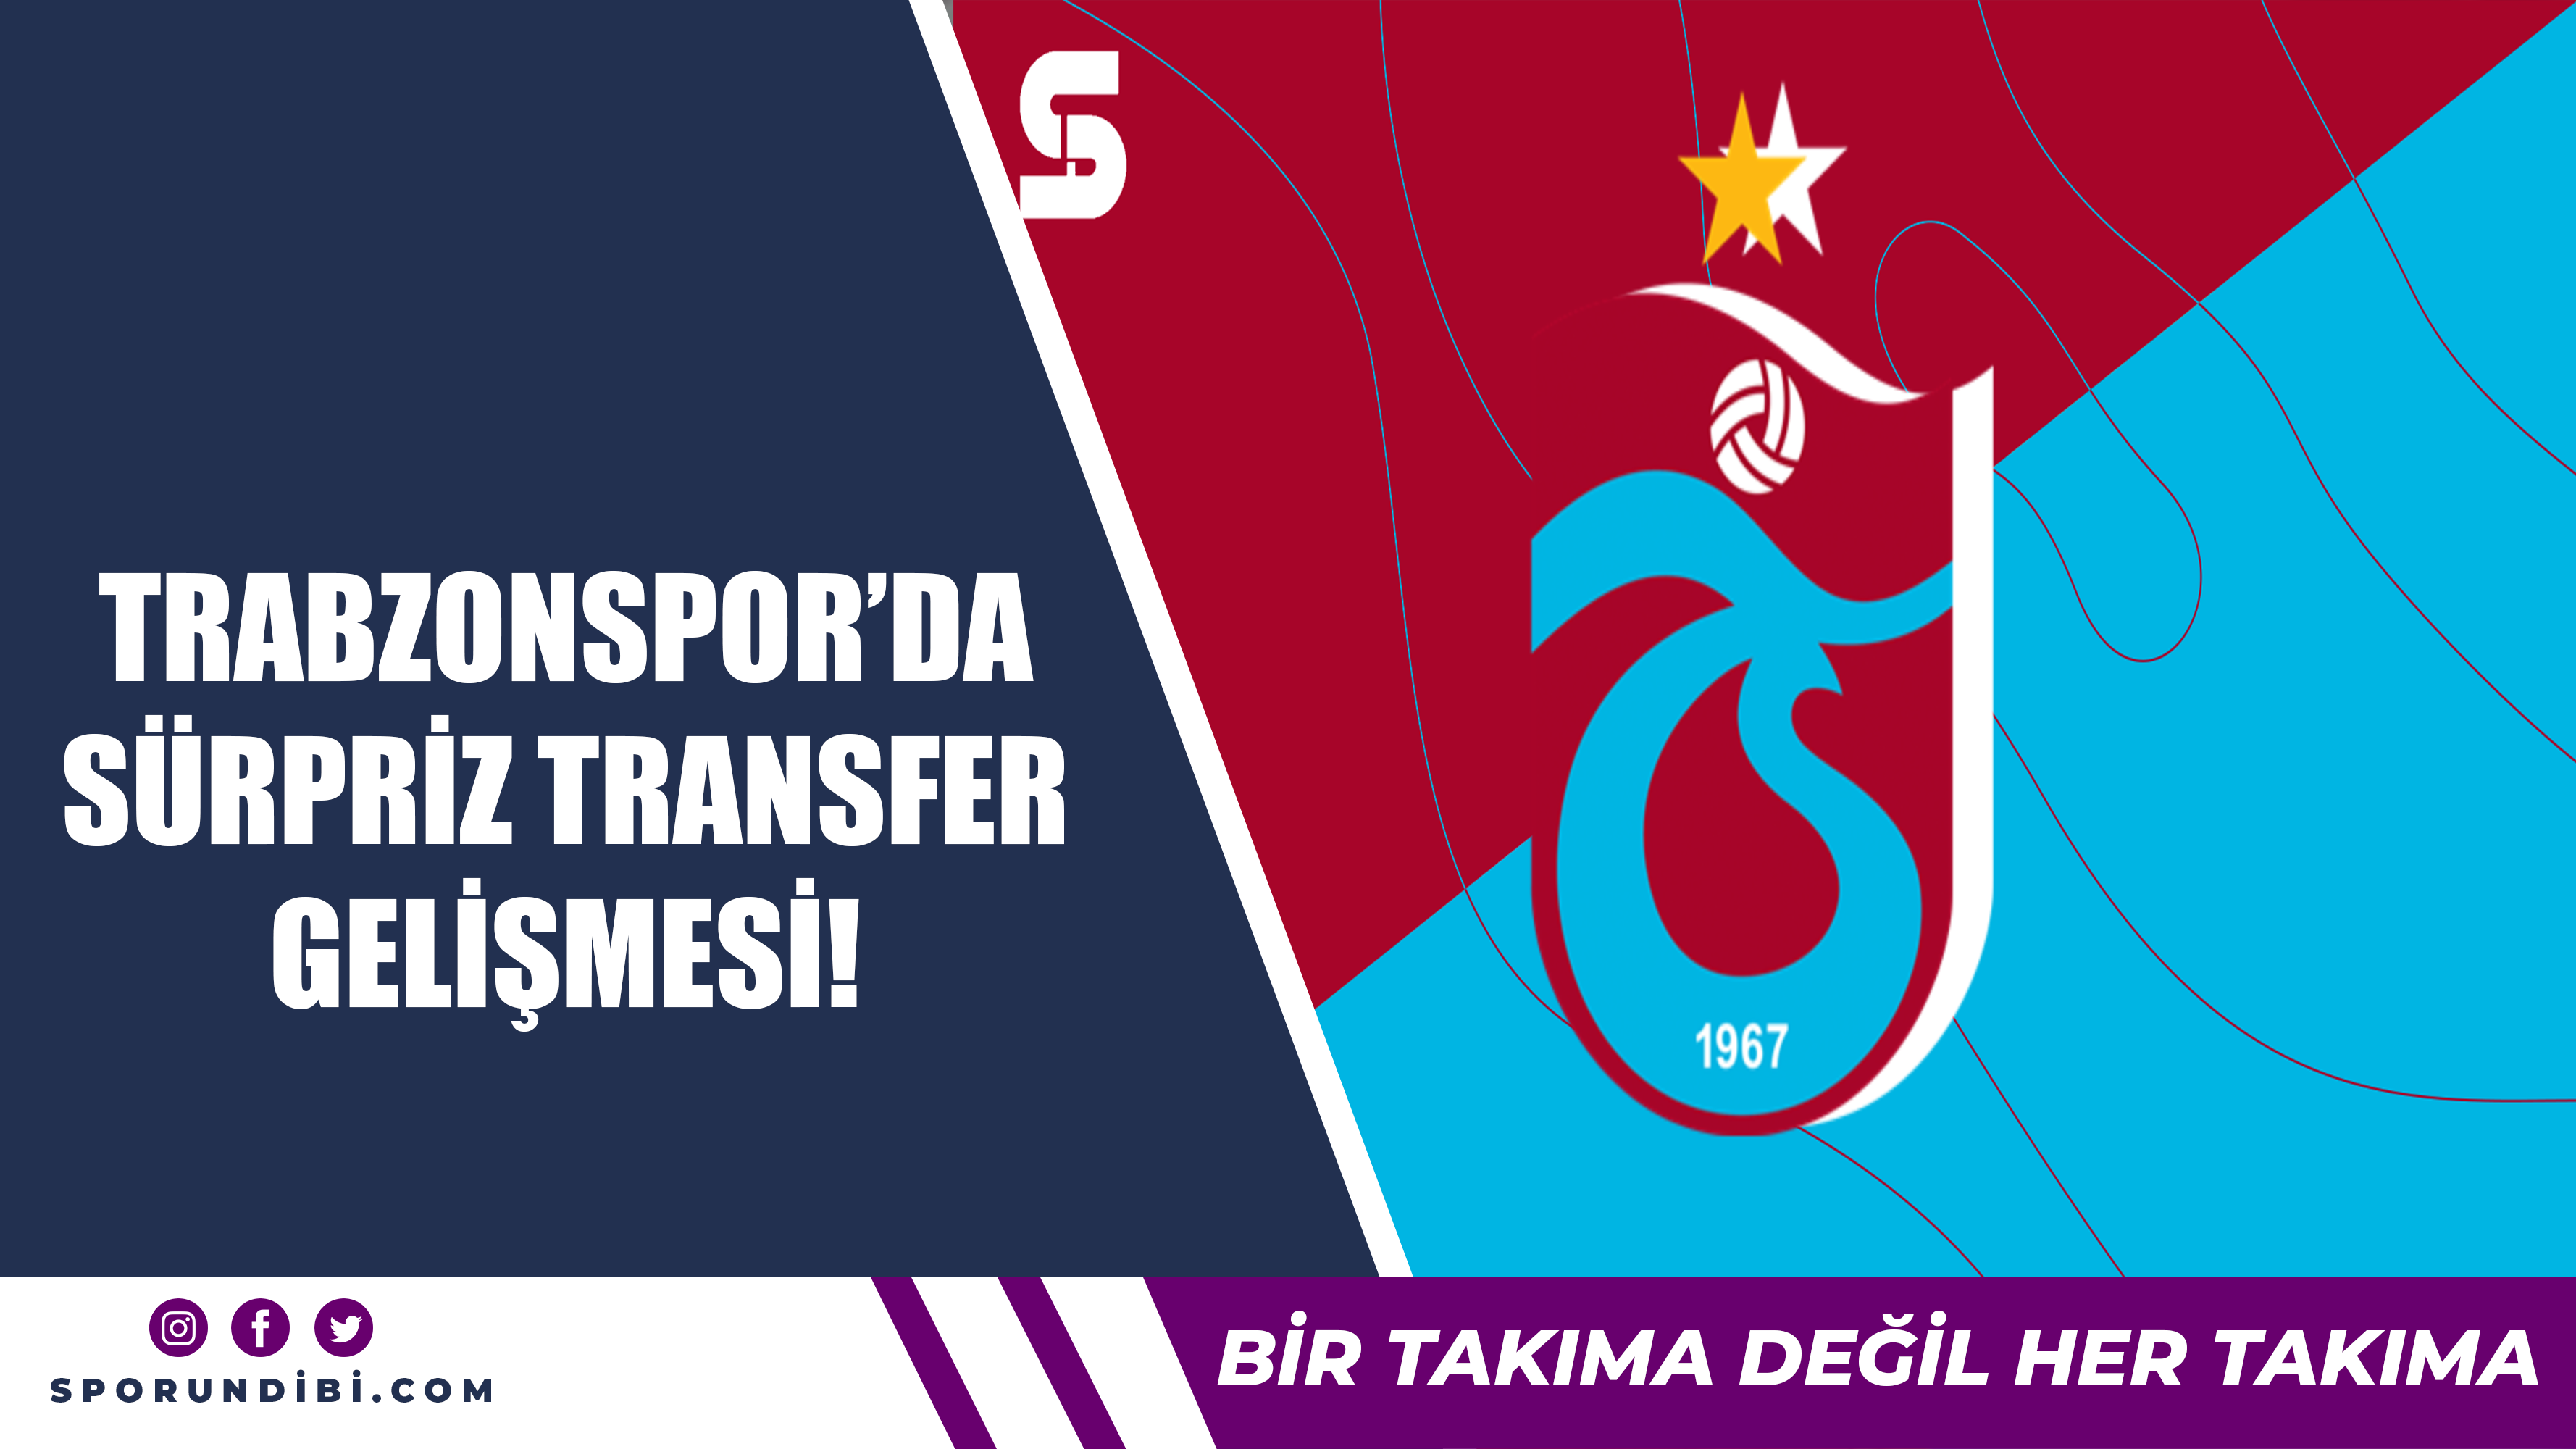 Trabzonspor'da sürpriz transfer gelişmesi!